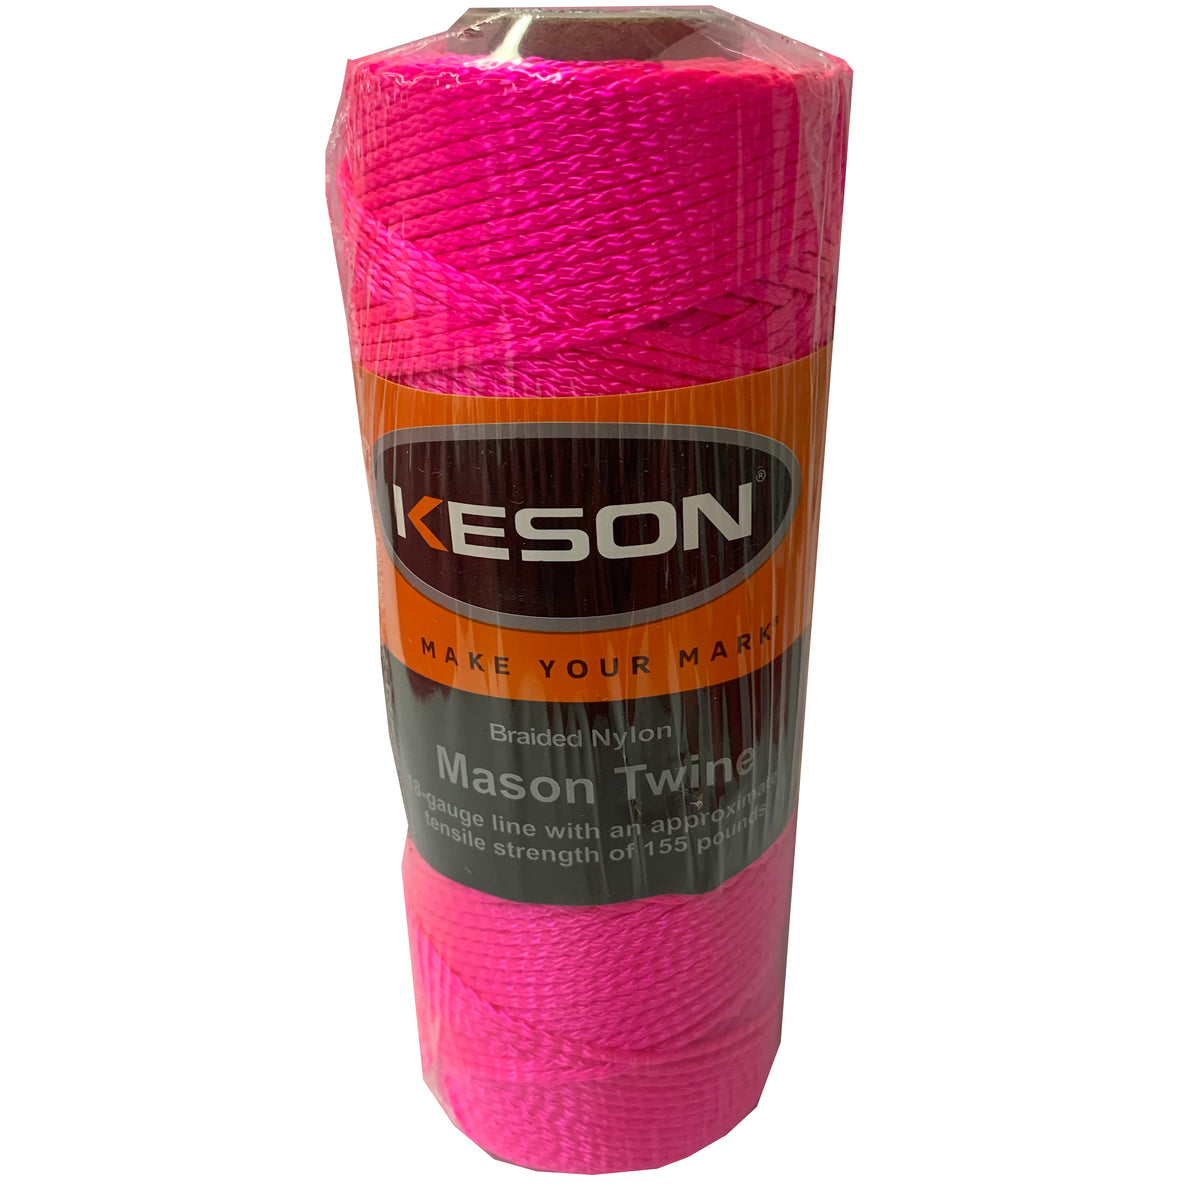 Marshalltown 500-ft Braided Fluorescent Pink Nylon Mason Line